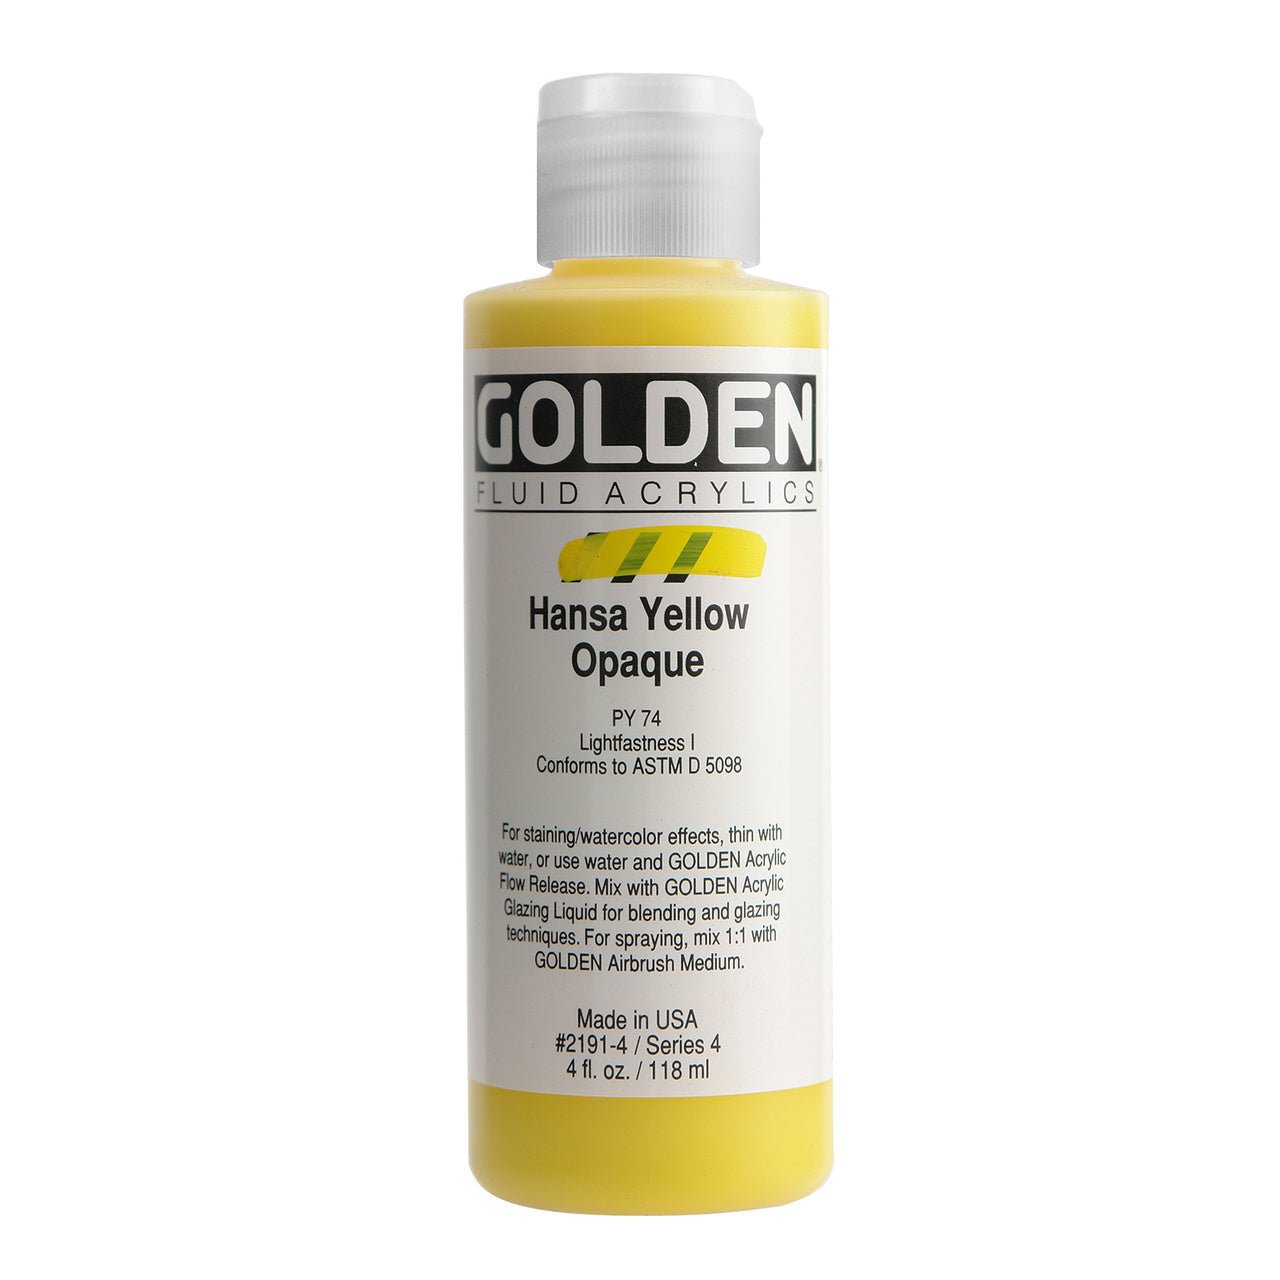 Golden Fluid Acrylic Hansa Yellow Opaque 4 oz - merriartist.com